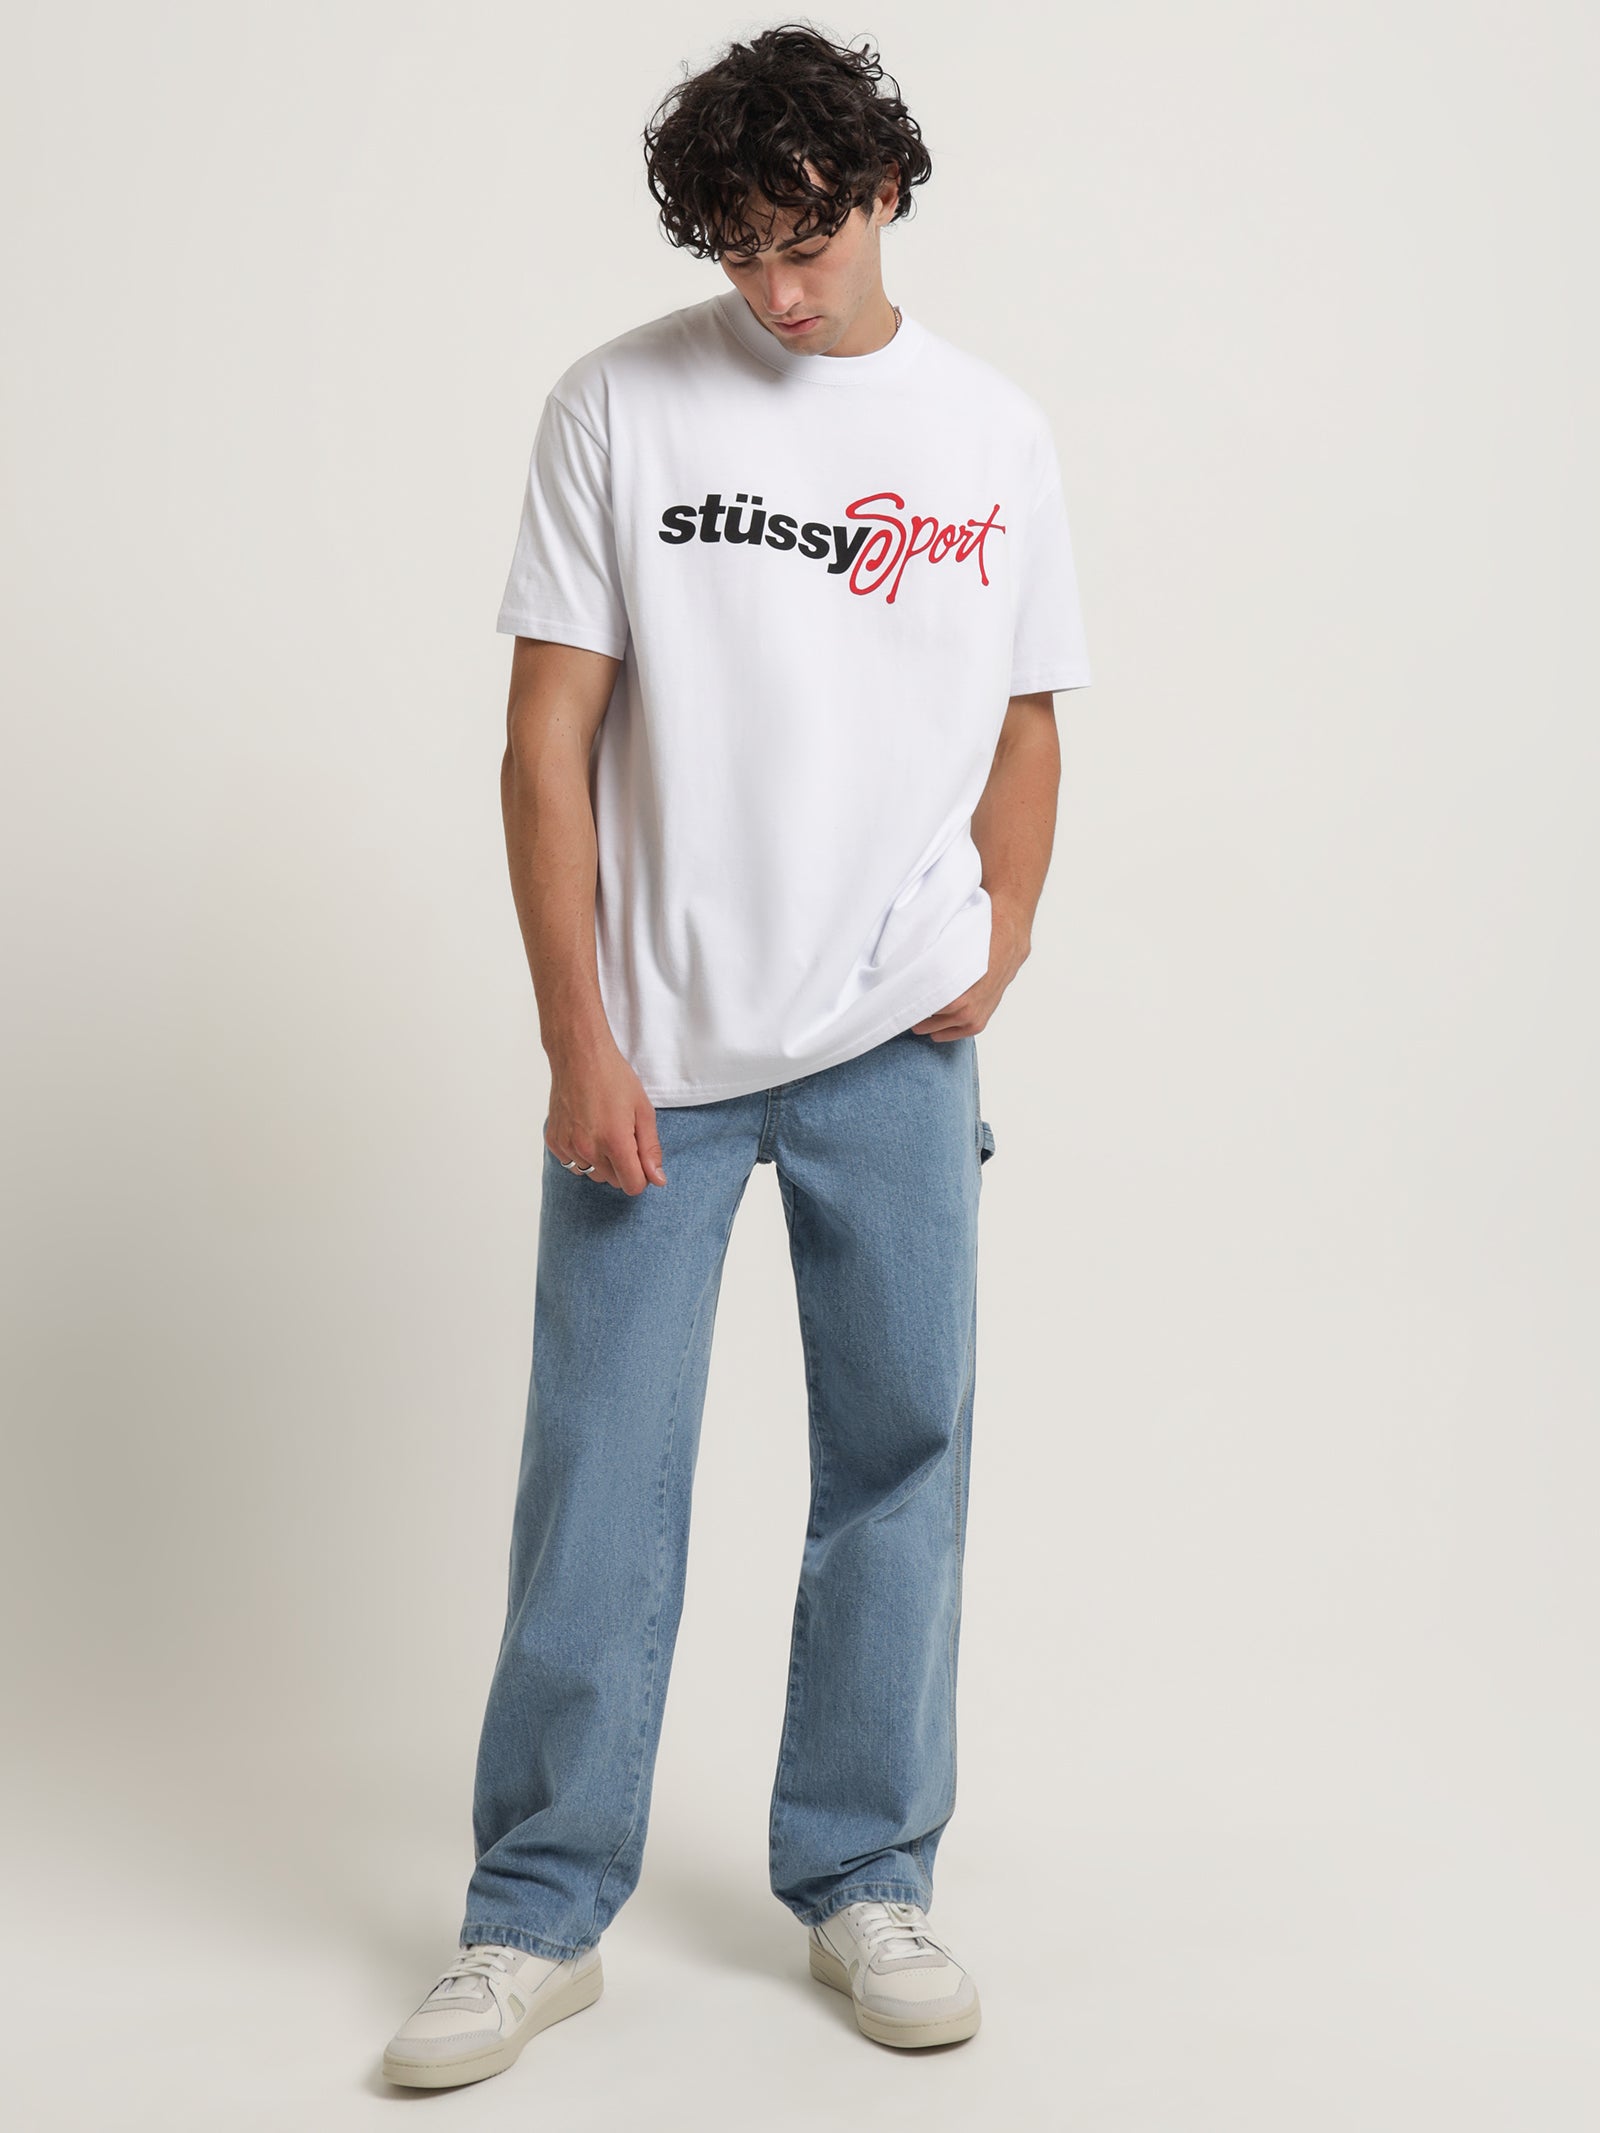 Stussy Sport 50-50 T-Shirt in White - Glue Store